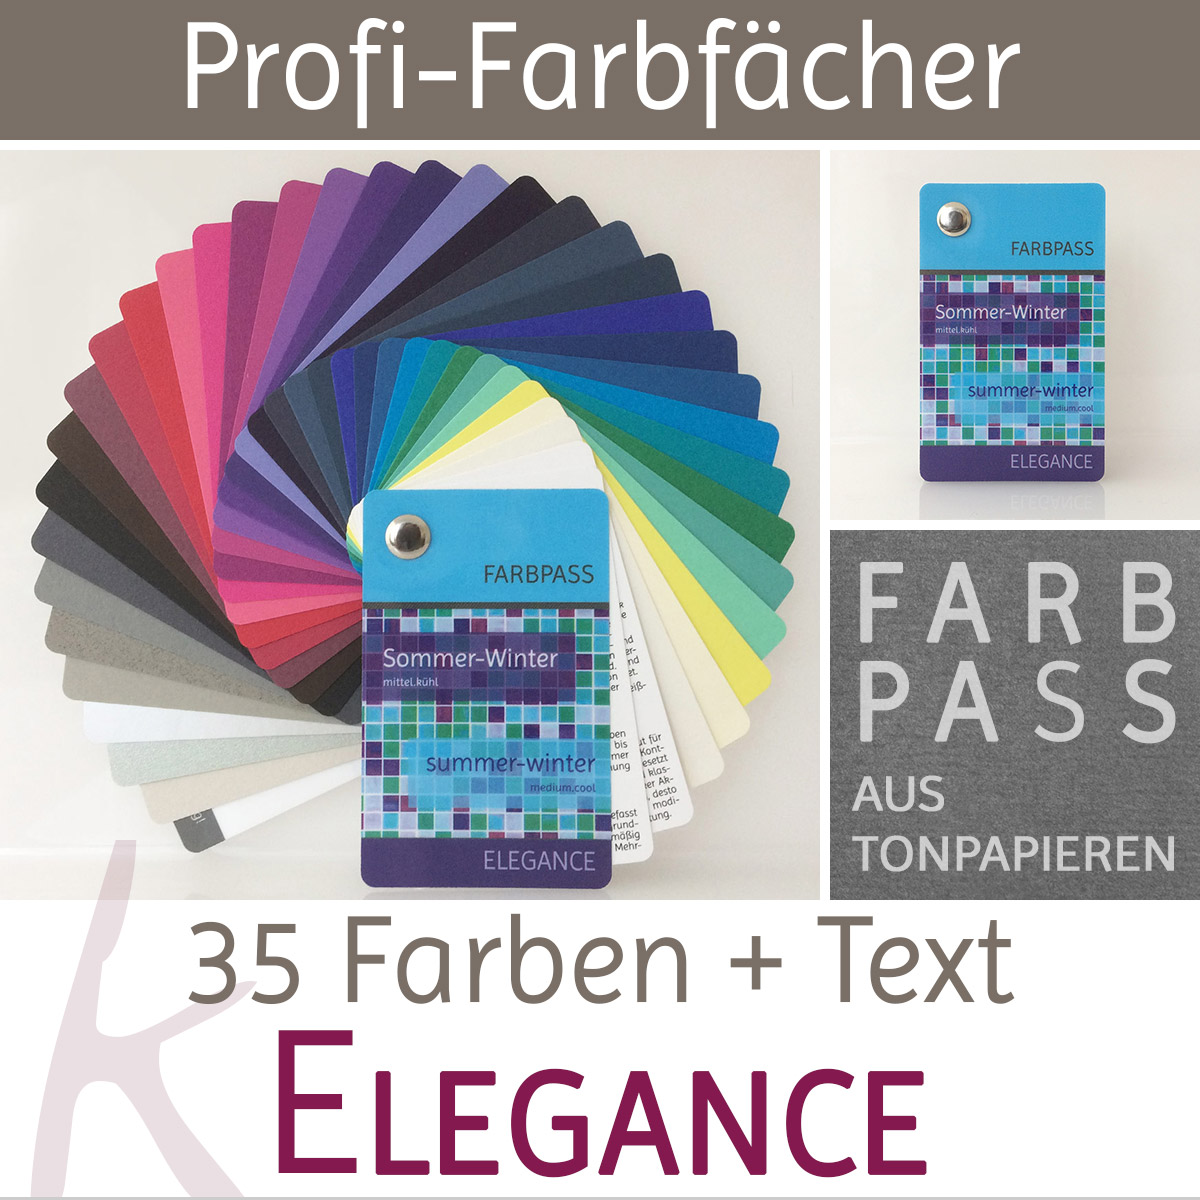 Farbpass Sommer-Wintertyp - Elegance | Komood